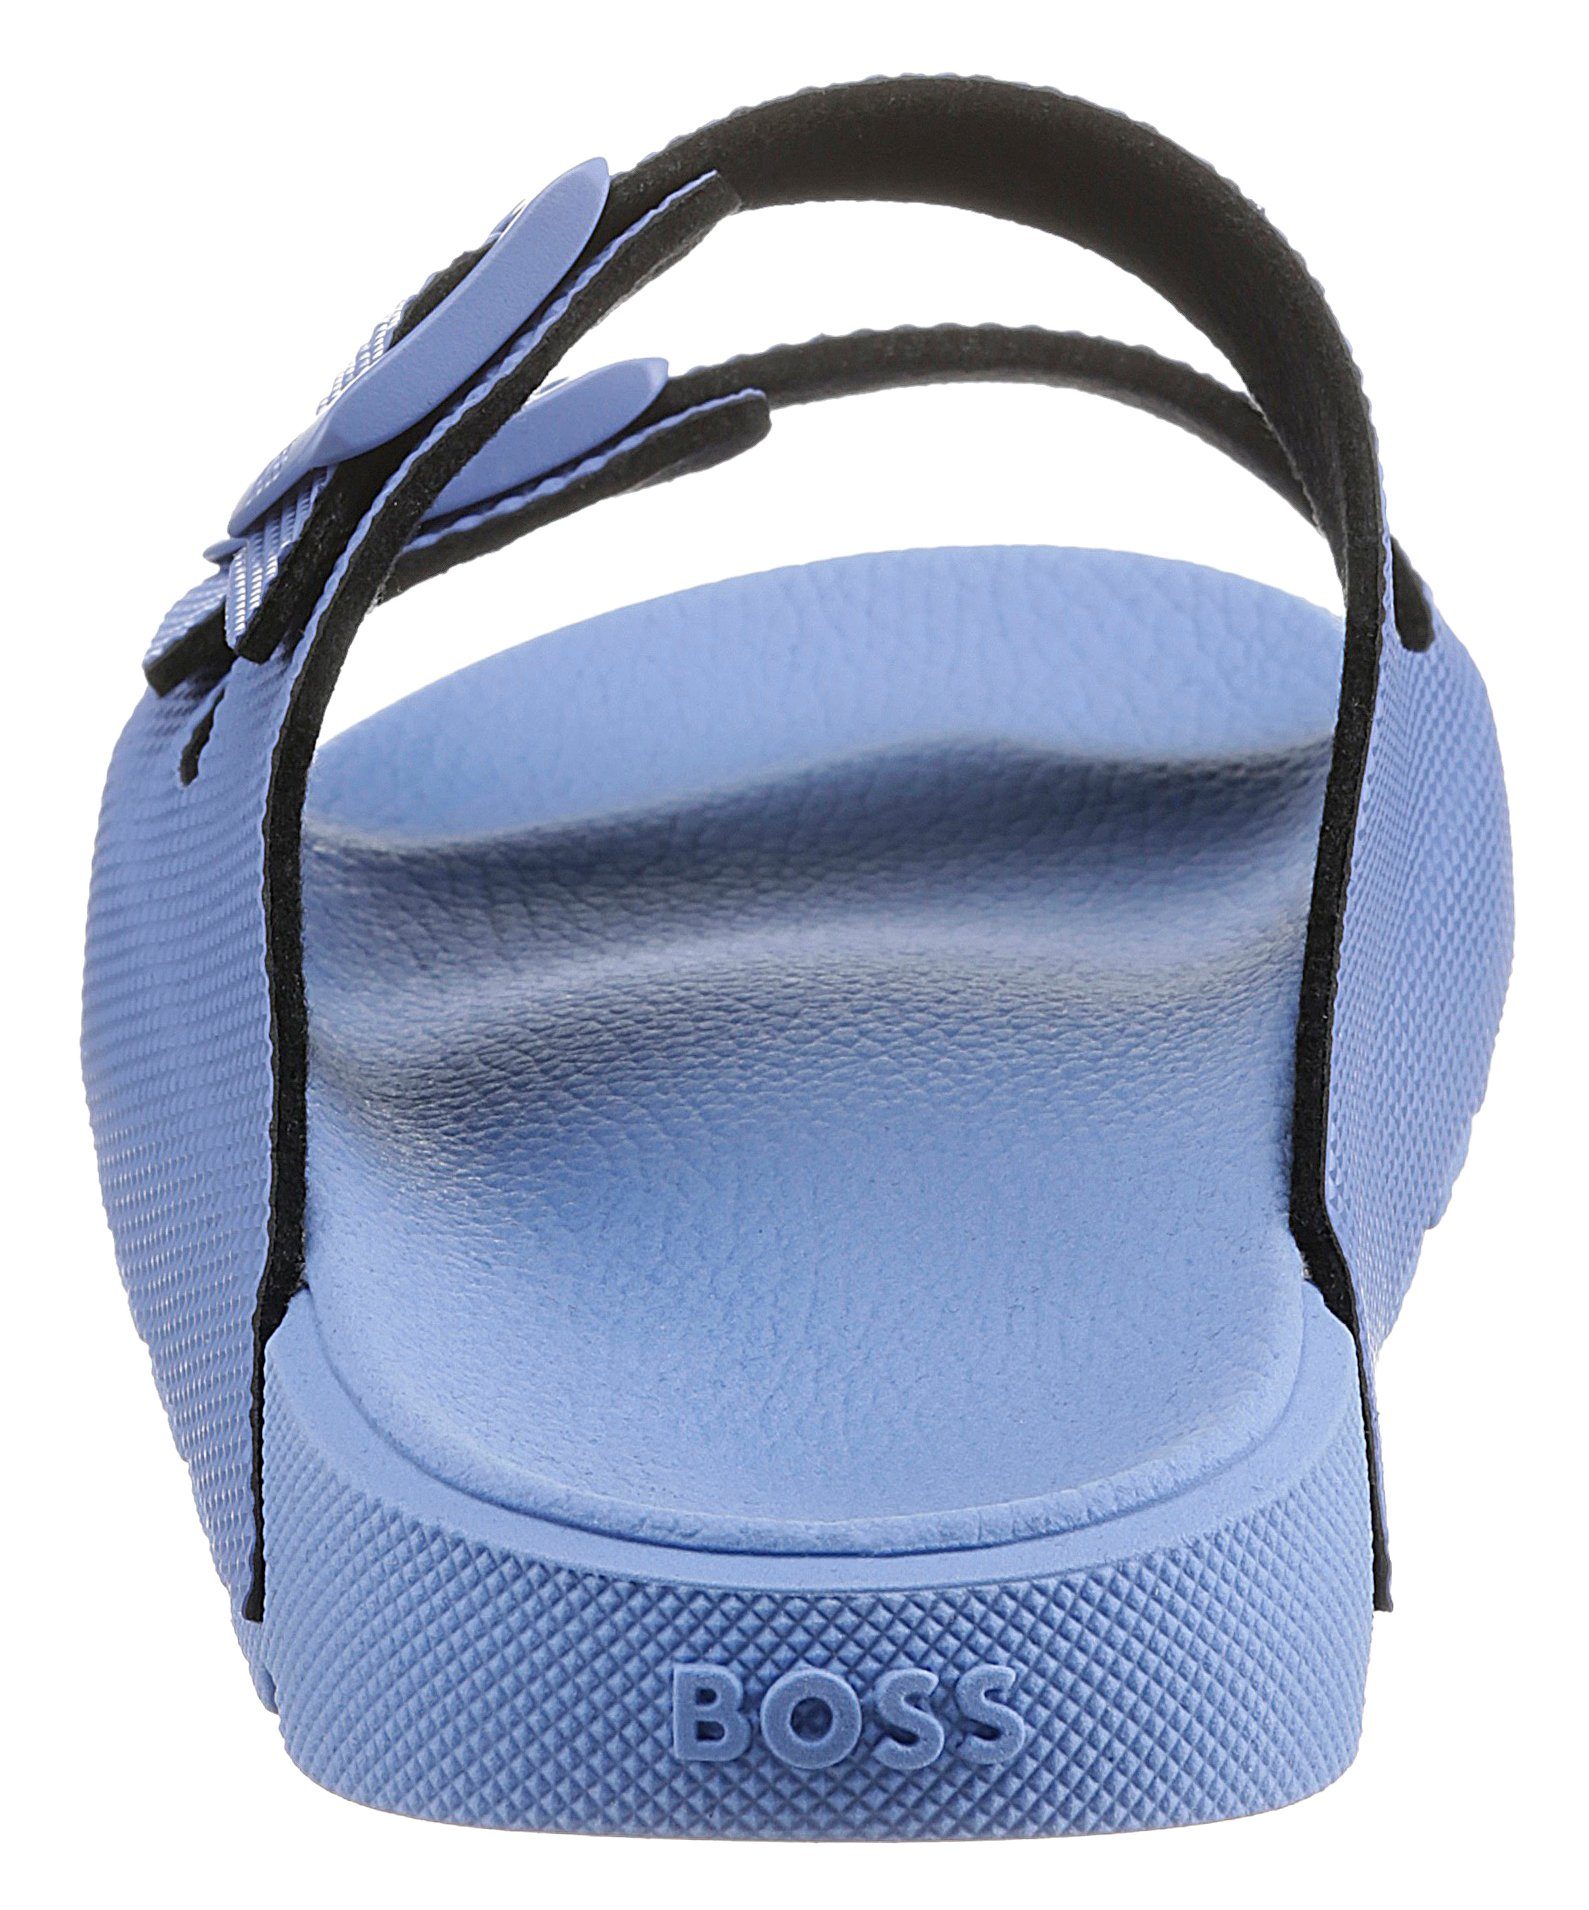 BOSS Surfley mit Bandagen zwei hellblau Pantolette verstellbaren